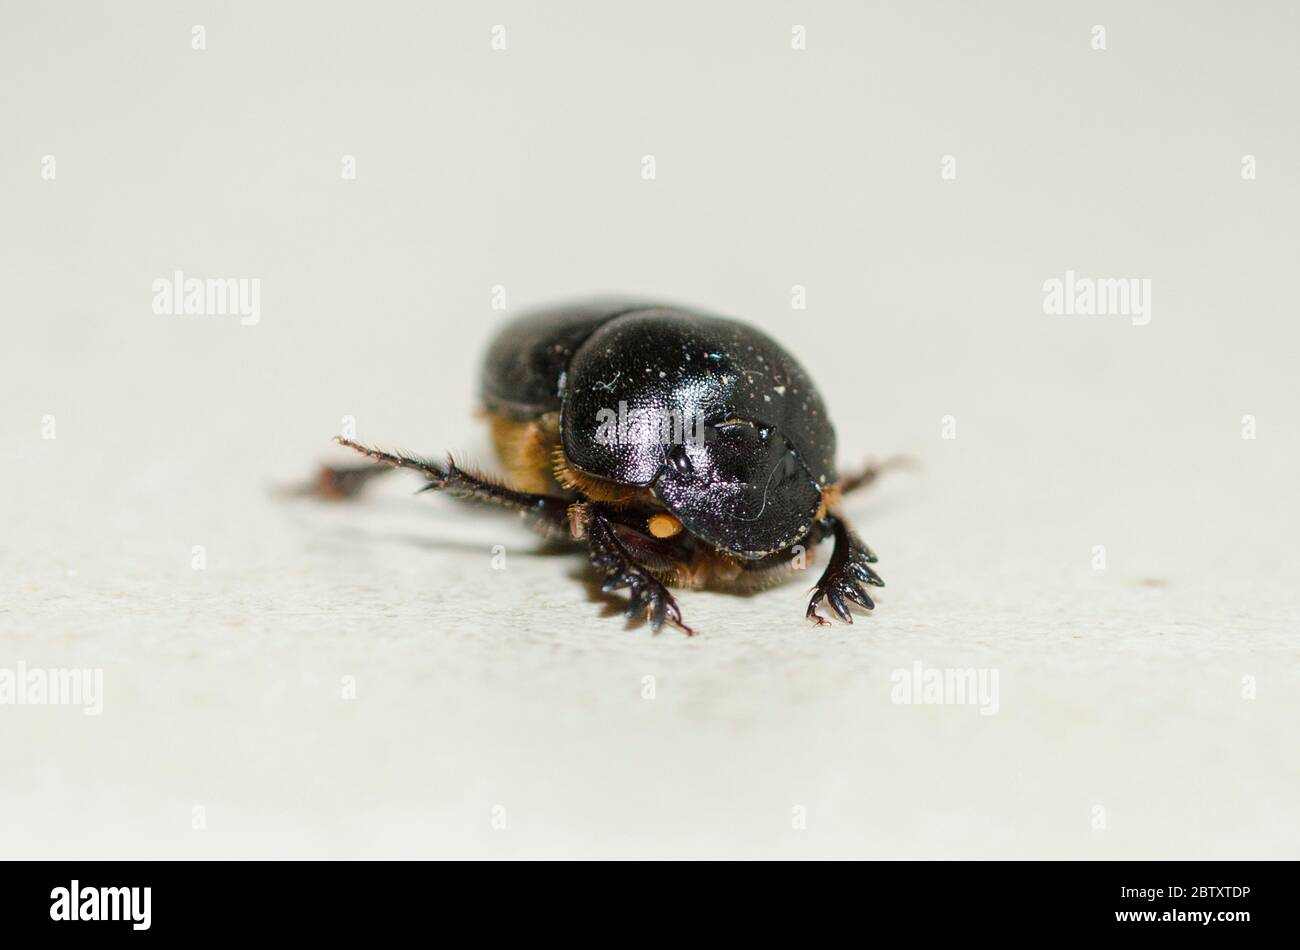 Dung Beetle, Famiglia Scarabaeidae, con acari coreici, classe Arachnidai, Klungkung, Bali, Indonesia Foto Stock